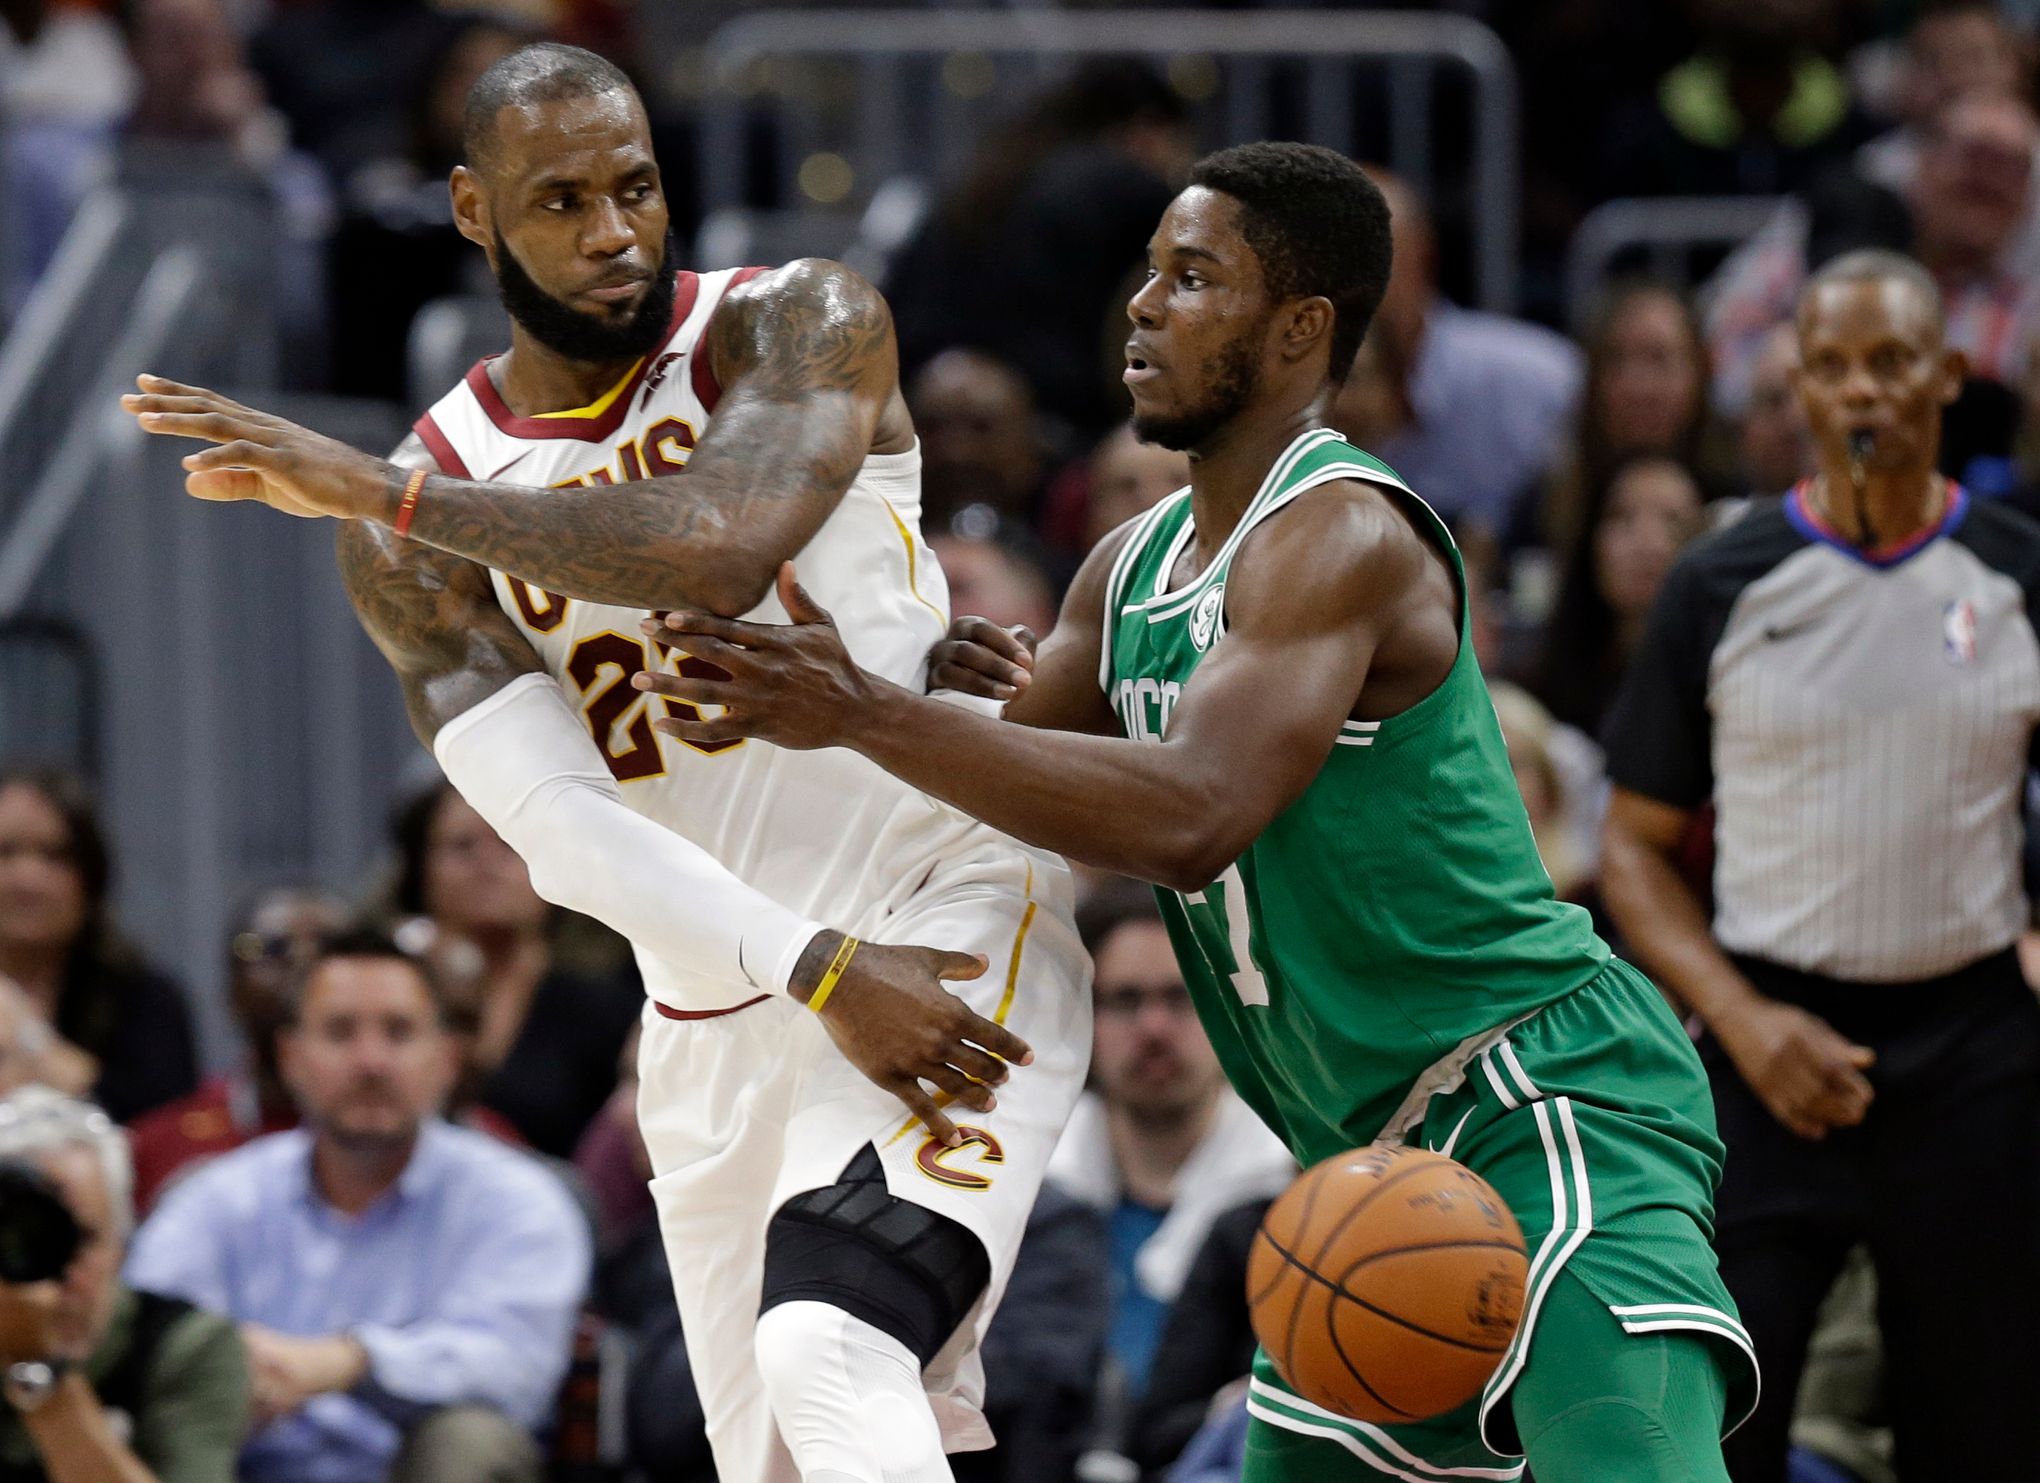 Celtics' Gordon Hayward suffers horrific injury as Cavaliers win